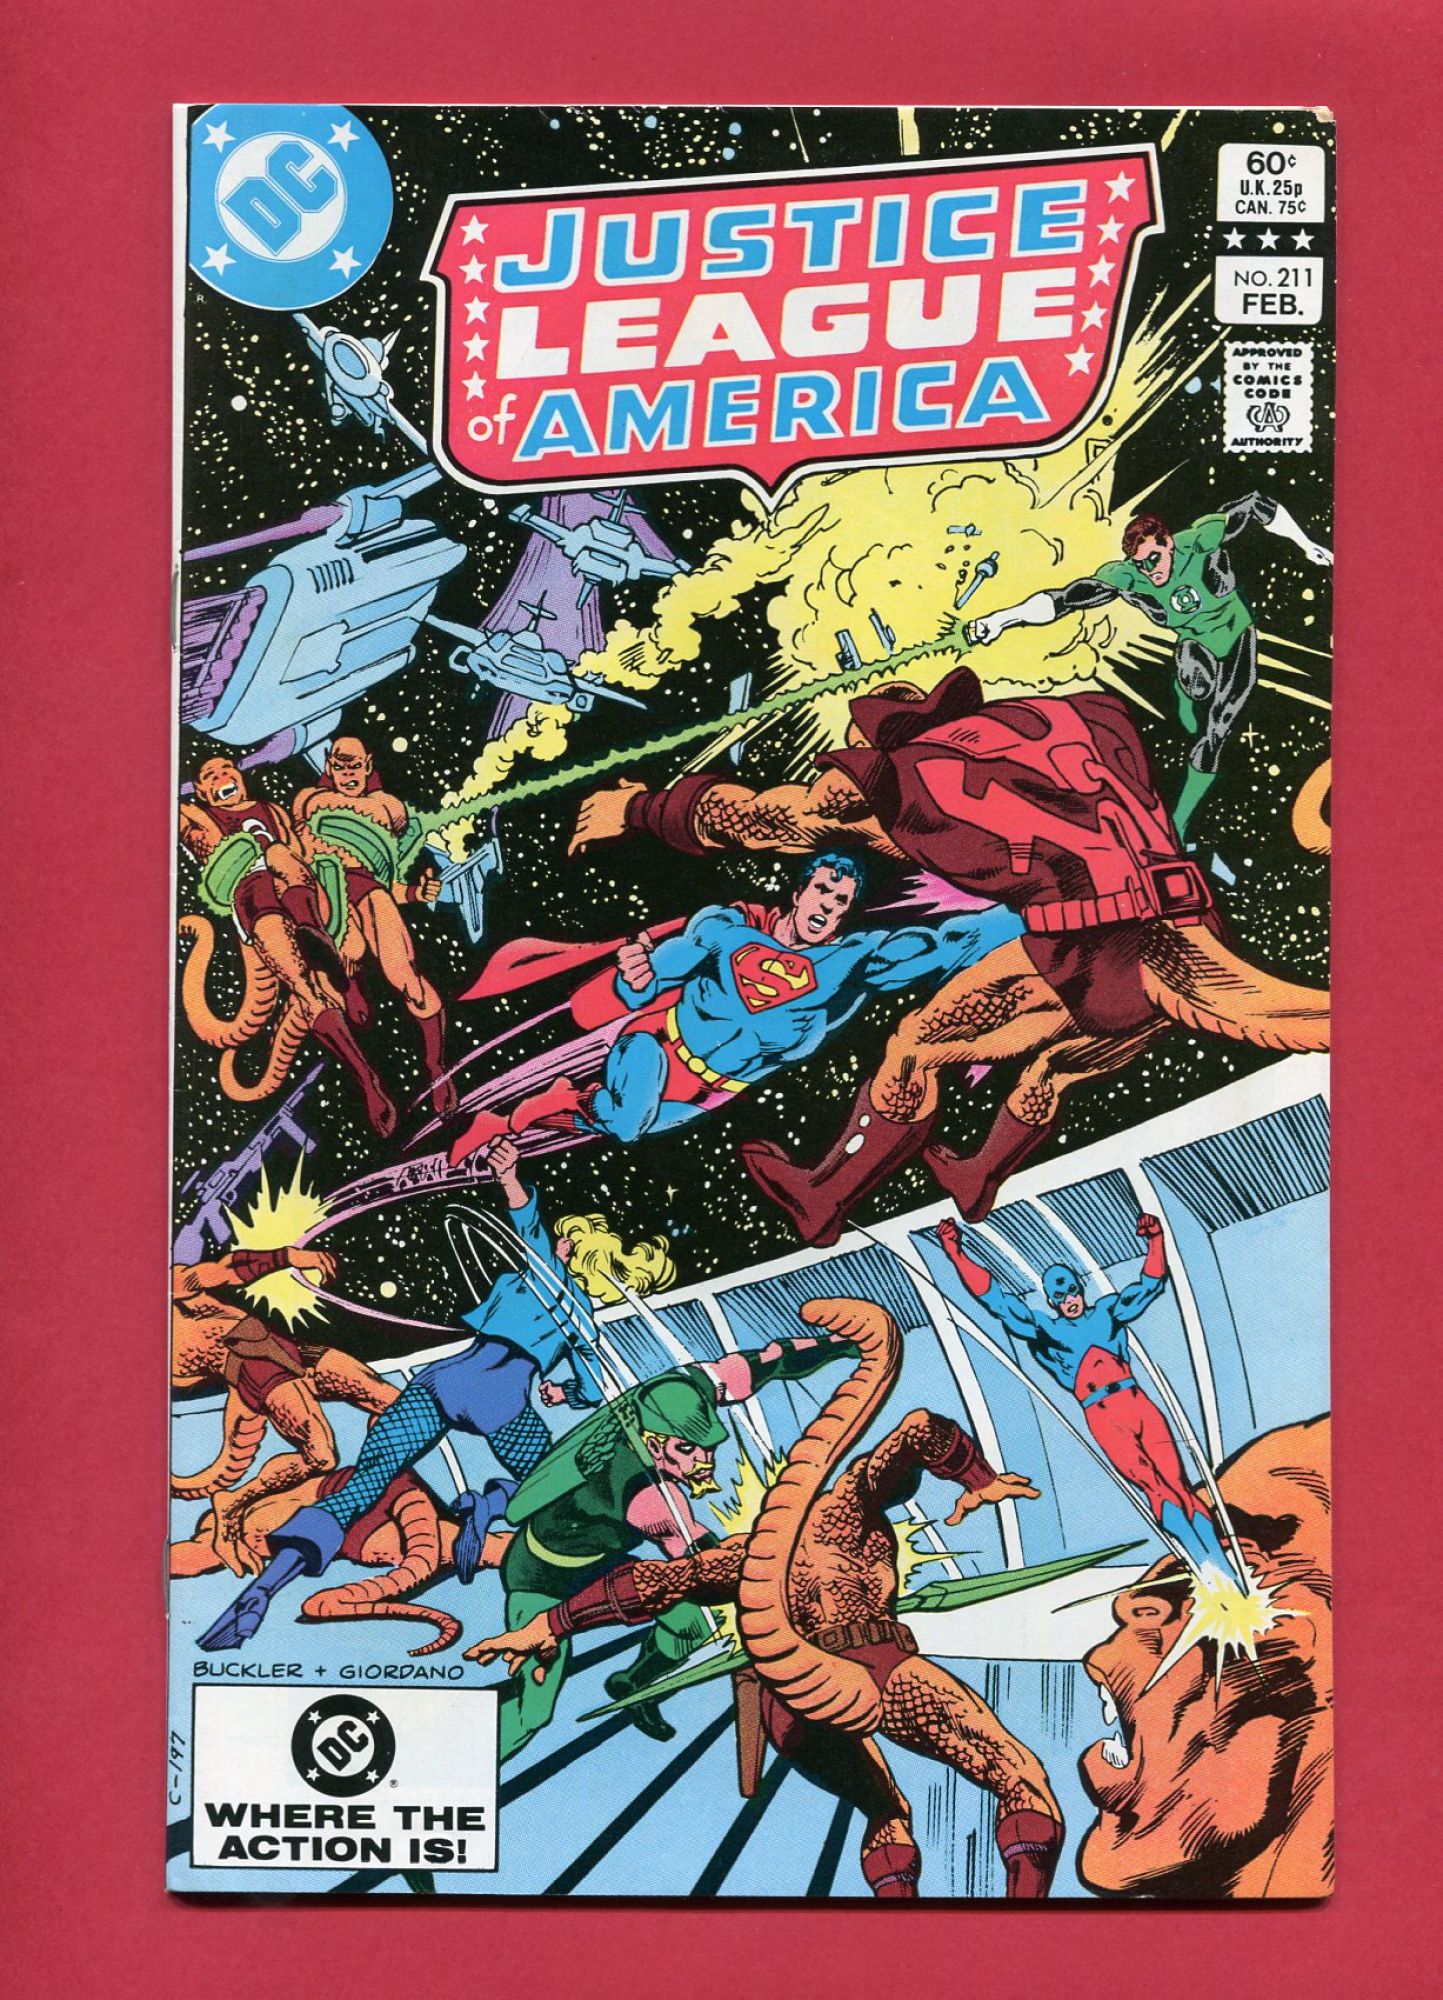 Justice League of America (Volume 1 1960) #211, Feb 1983, 8.5 VF+